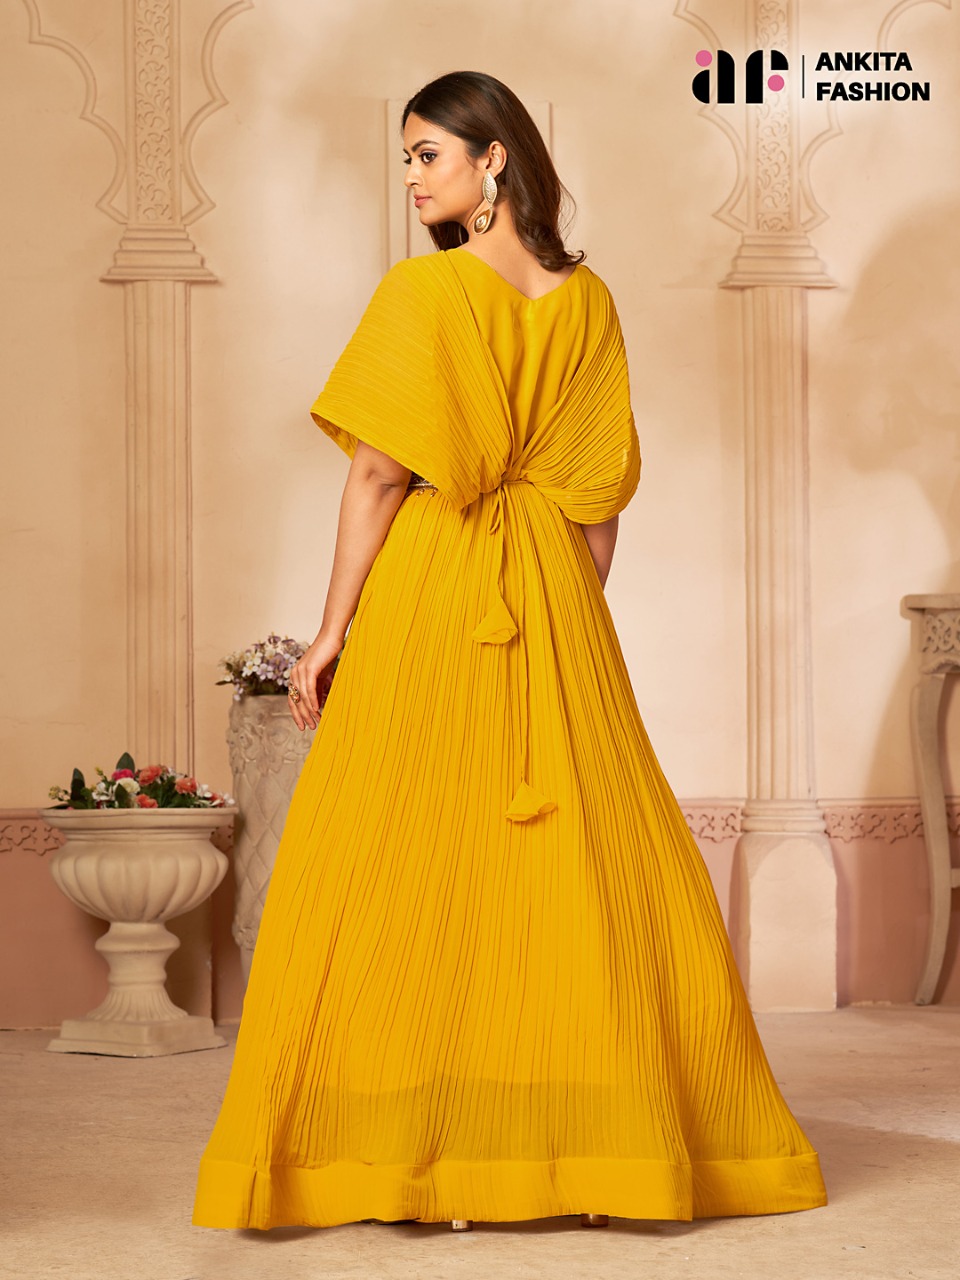 ankita fashion anamika georgette elegant top with dupatta catalog